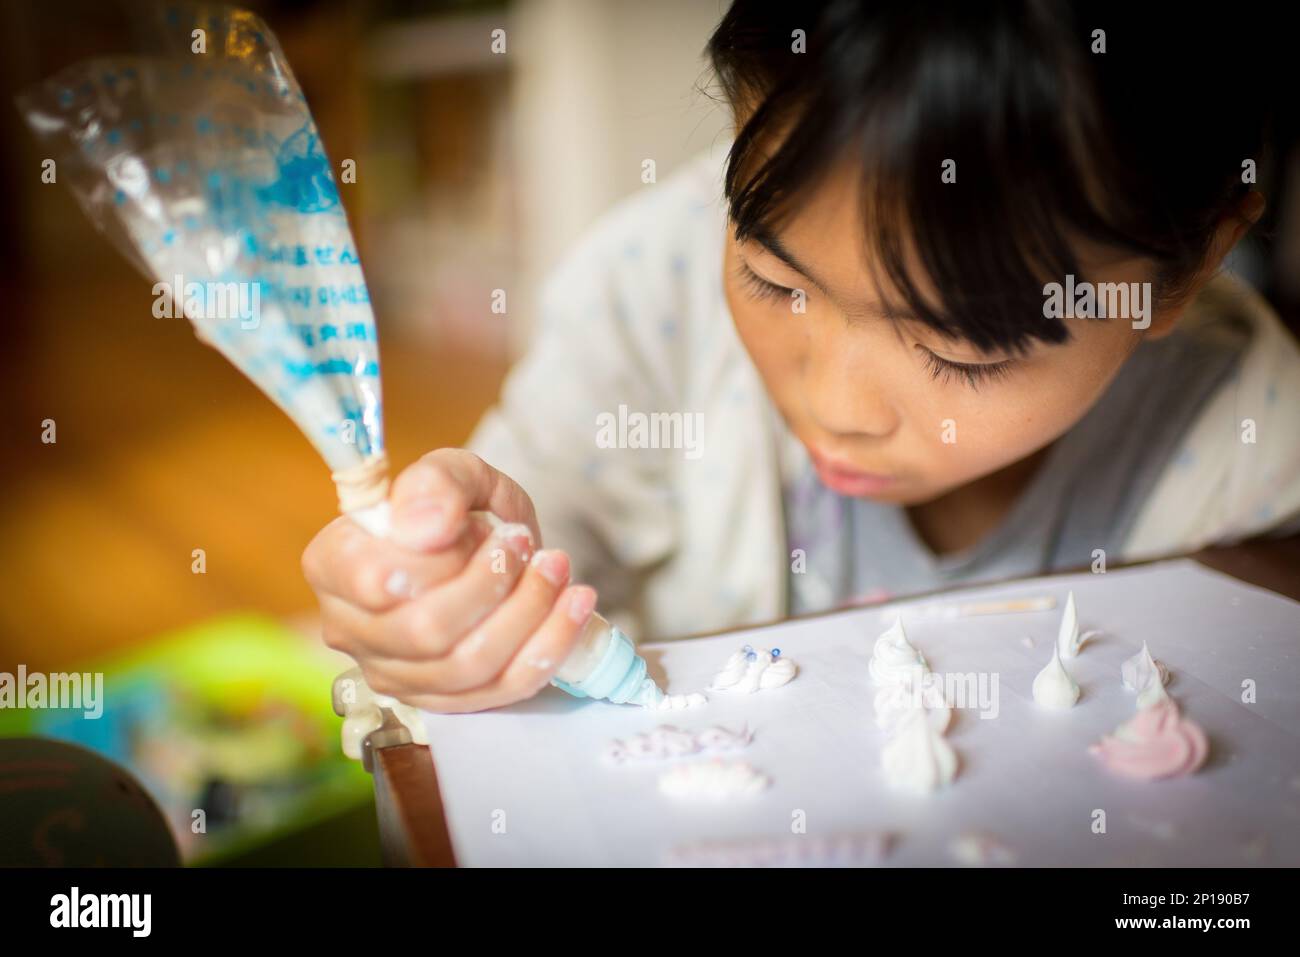 Girls making craft cakes using silicone paste Stock Photo